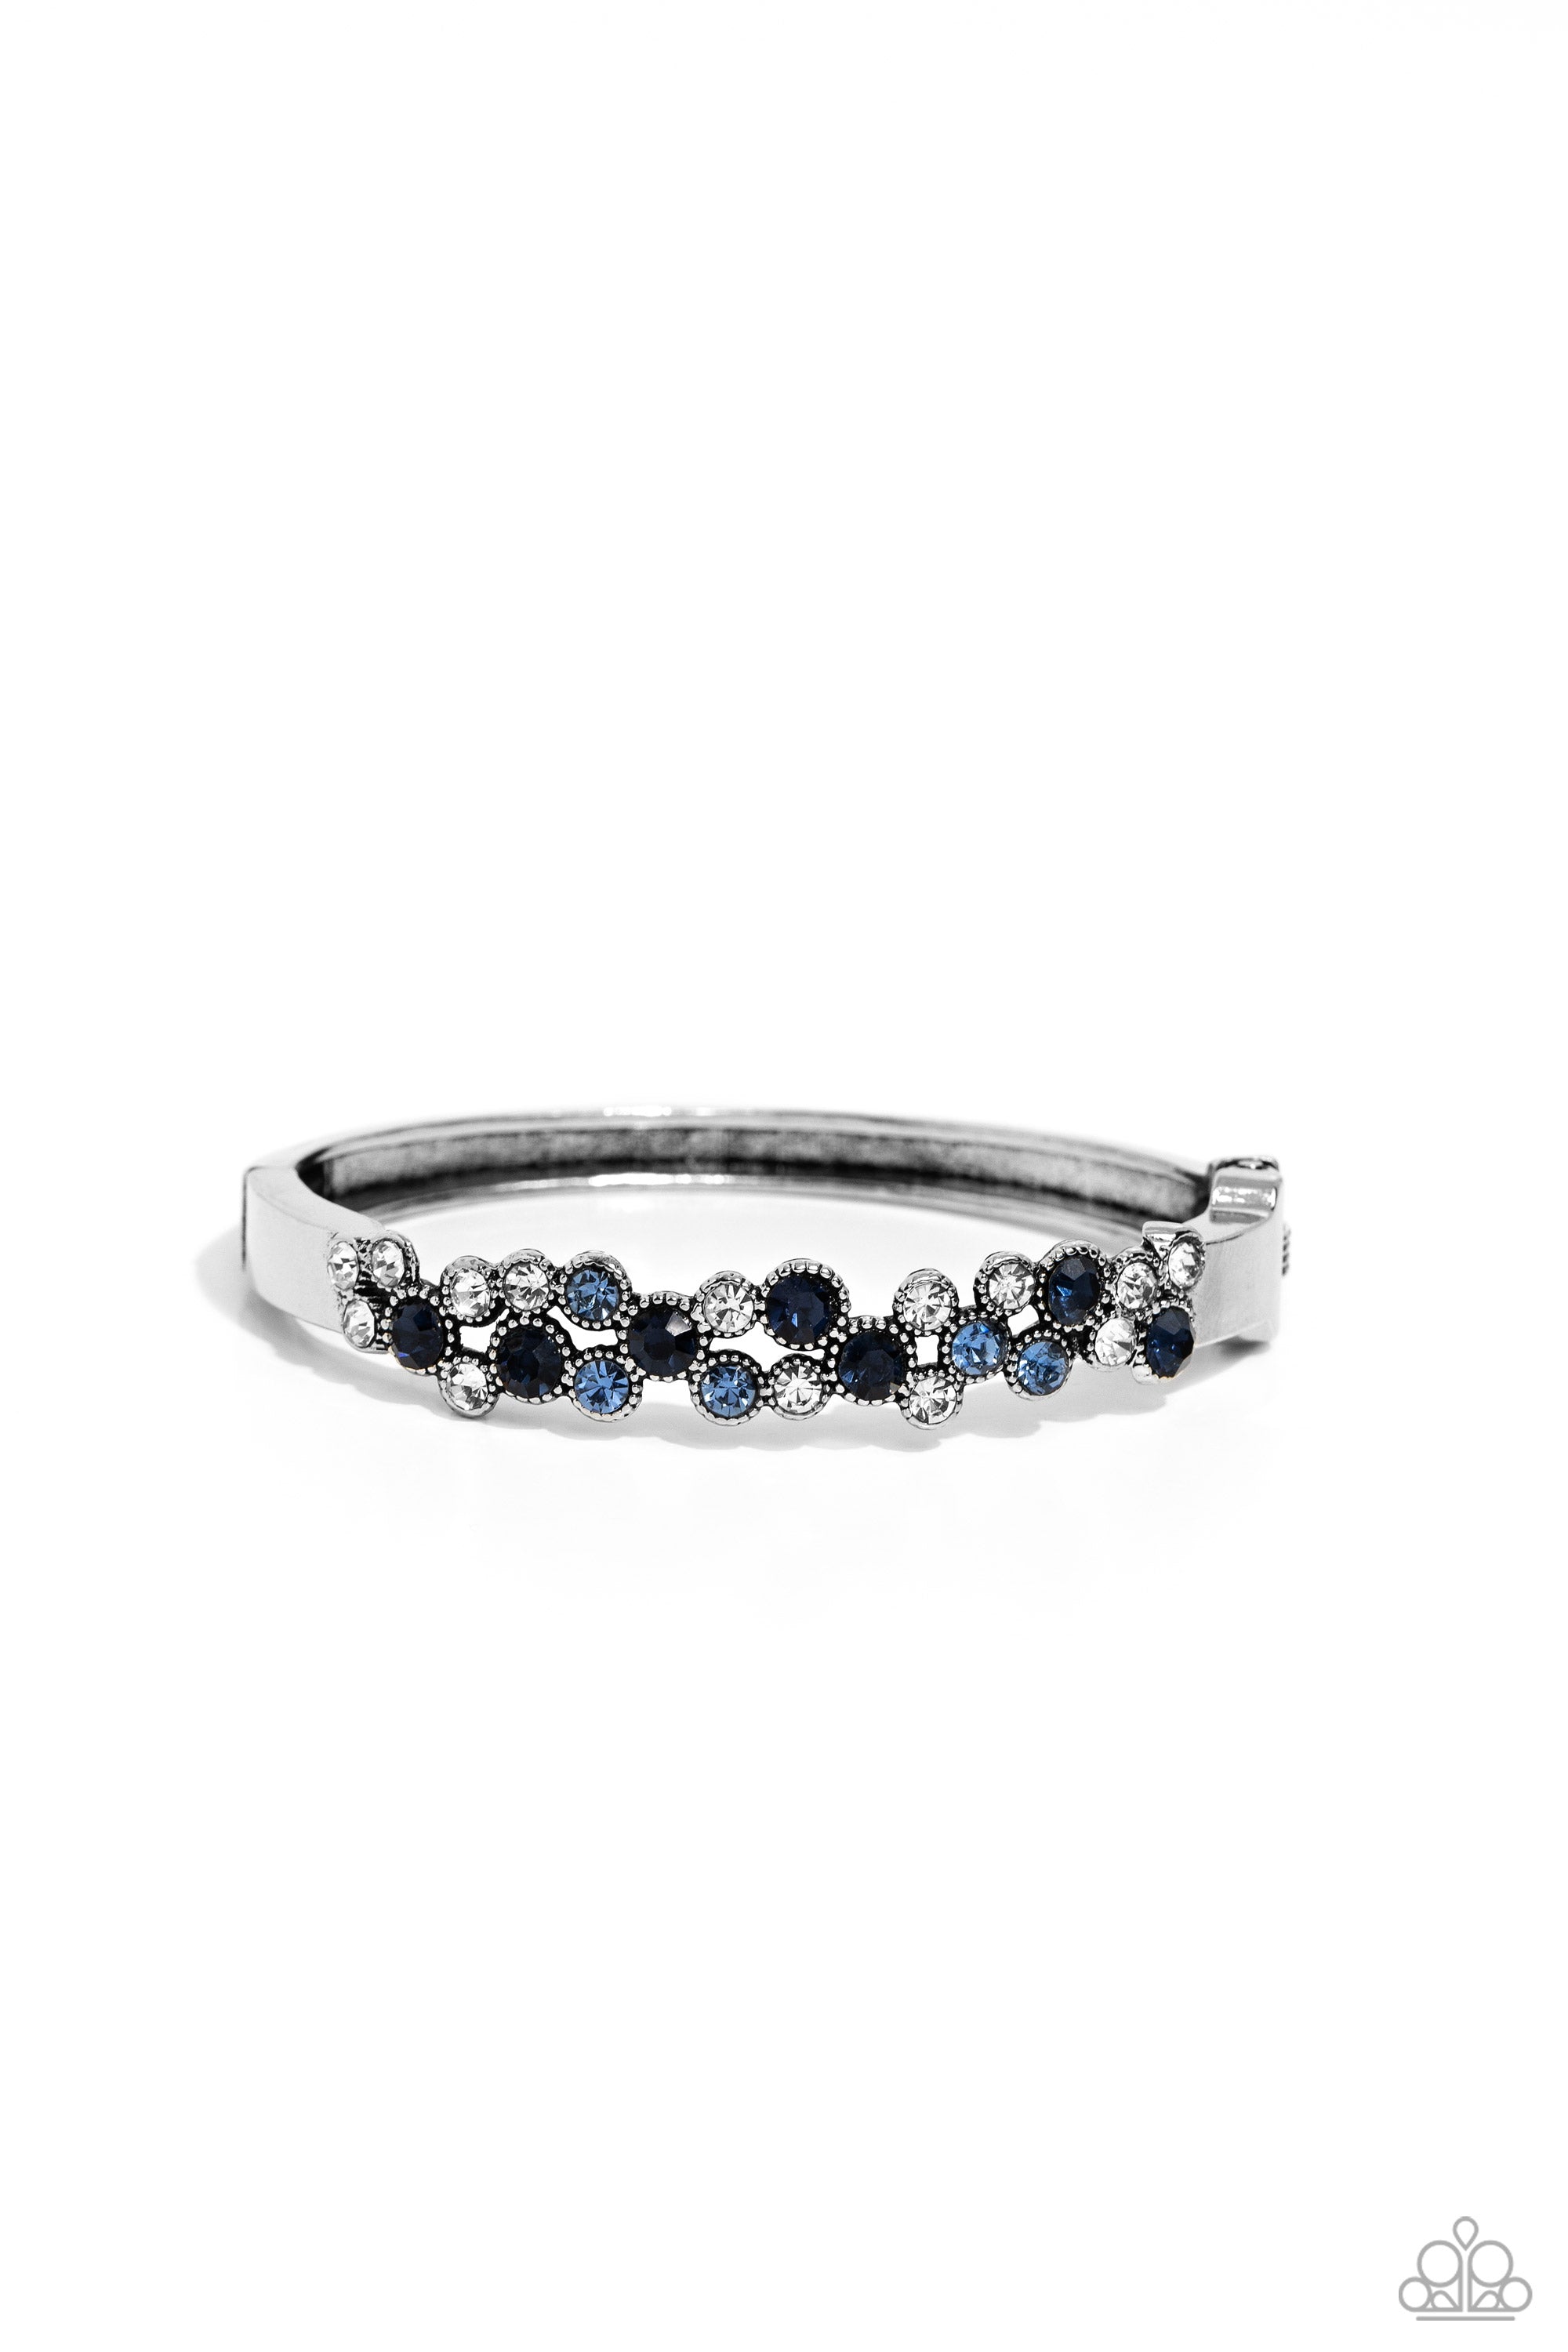 Big City Bling Blue Rhinestone Bracelet - Paparazzi Accessories- lightbox - CarasShop.com - $5 Jewelry by Cara Jewels